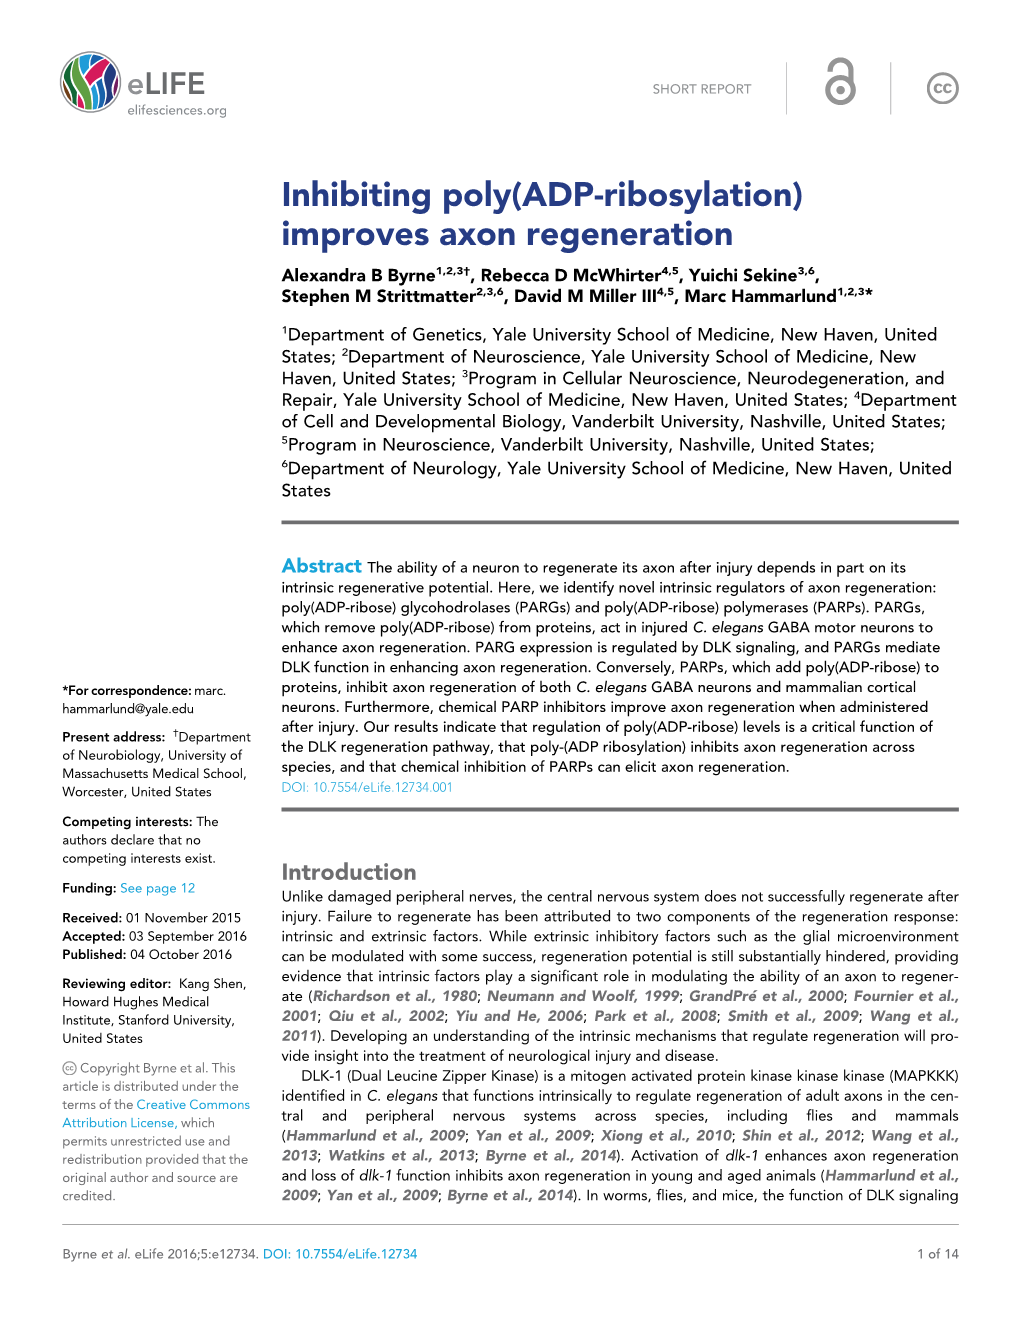 Inhibiting Poly(ADP-Ribosylation) Improves Axon Regeneration